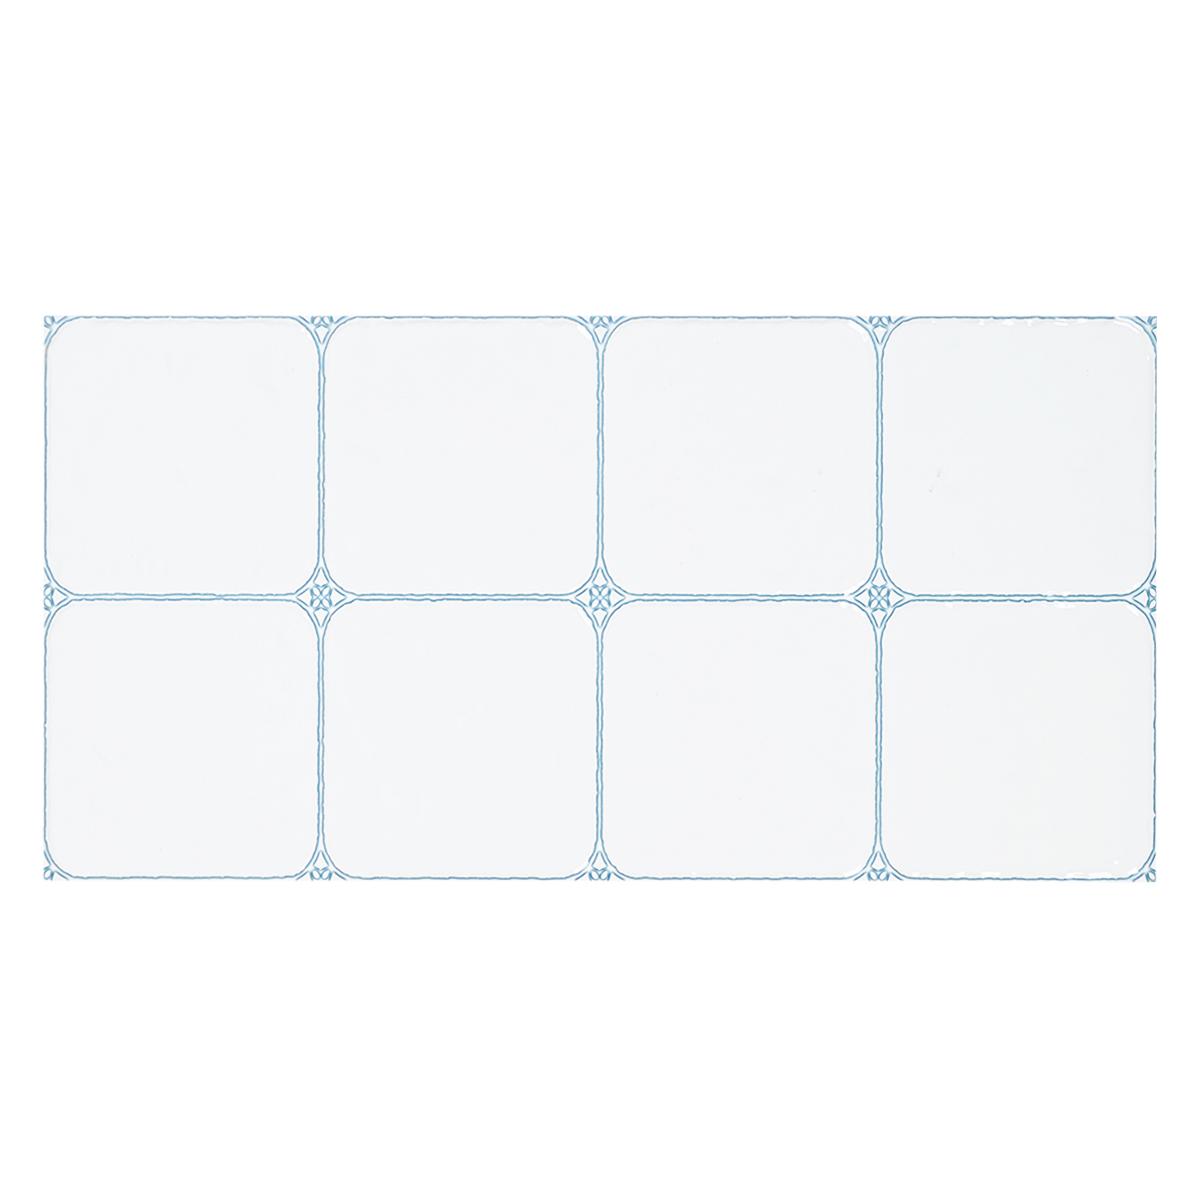 Mayólica Cubice Blanco Brillante - 30X60 cm - 1.44 m2